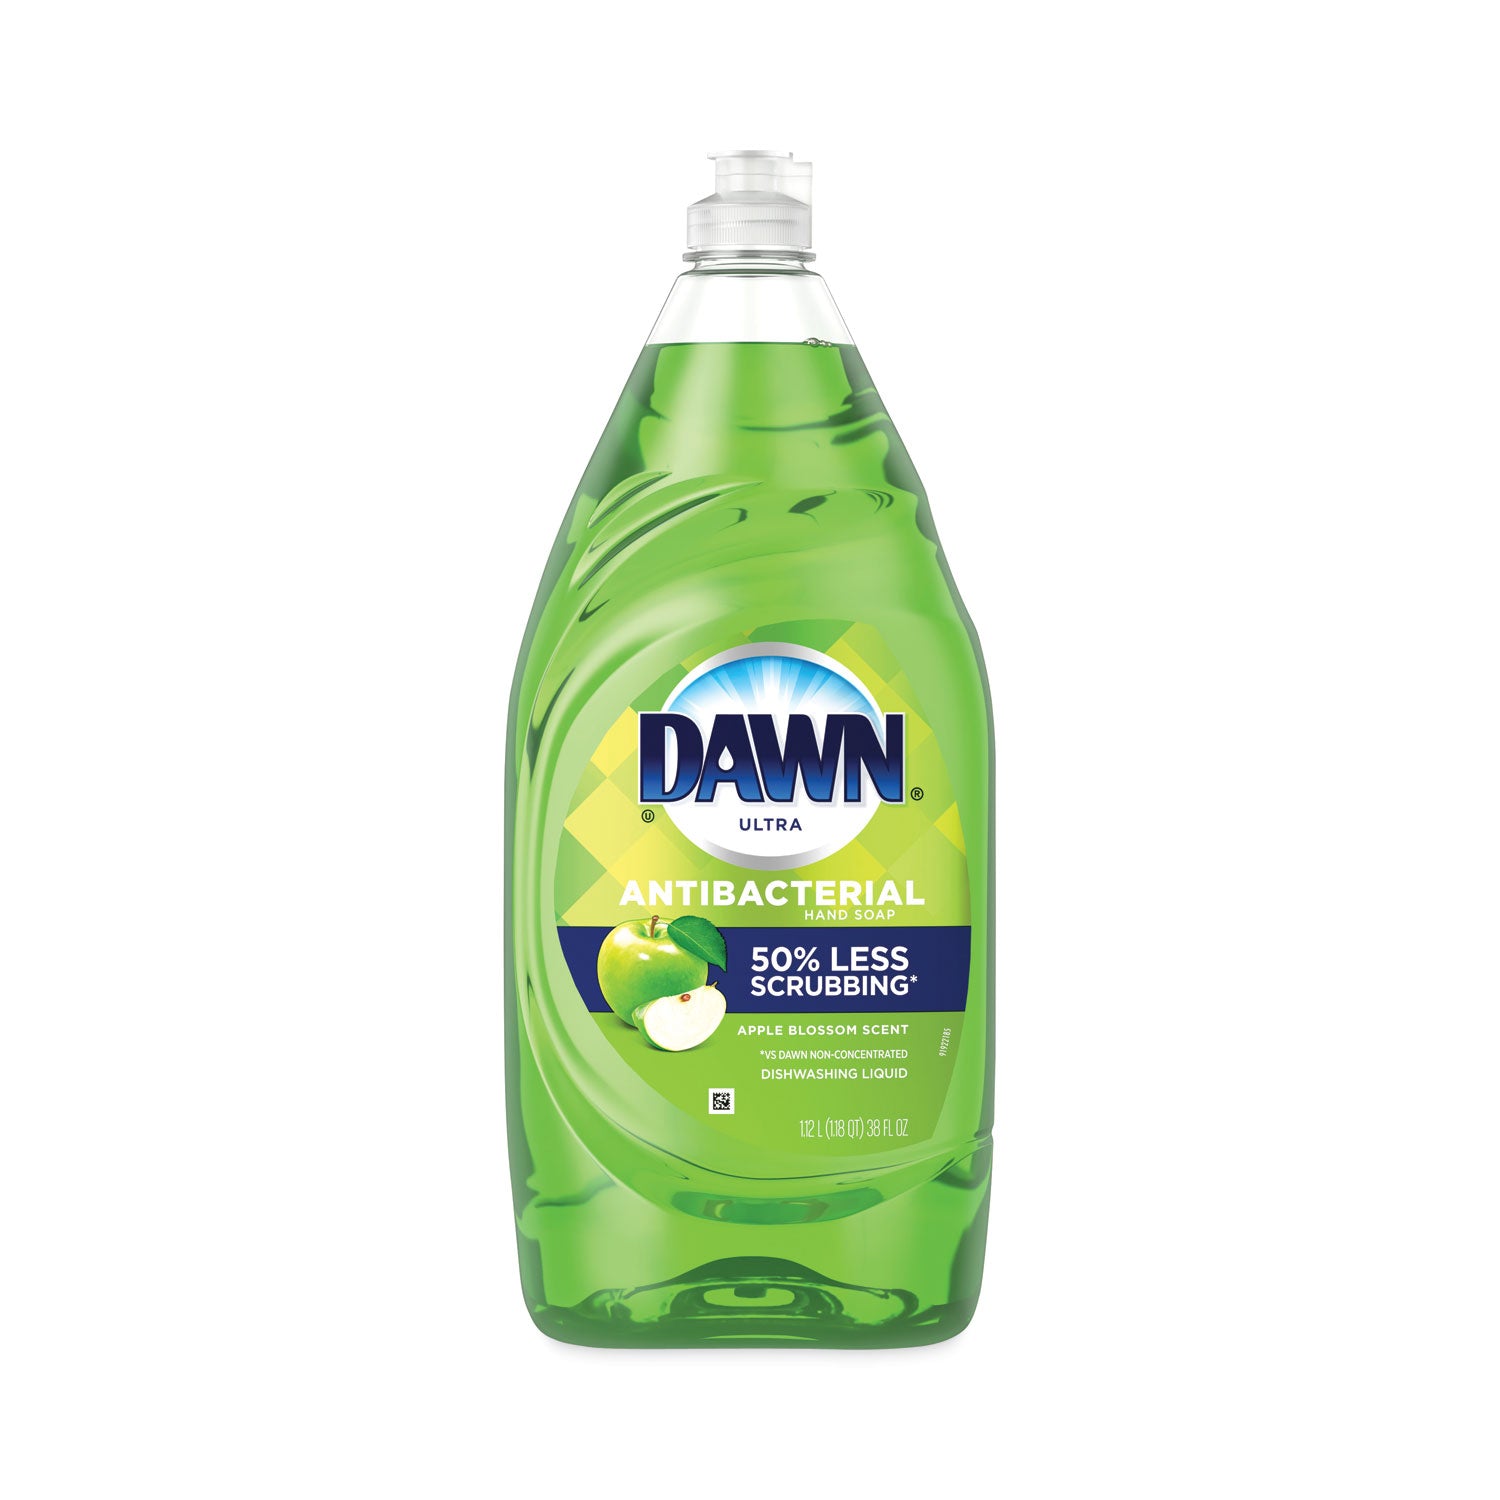 ultra-antibacterial-dishwashing-liquid-apple-blossom-scent-38-oz-bottle_pgc01134ea - 1